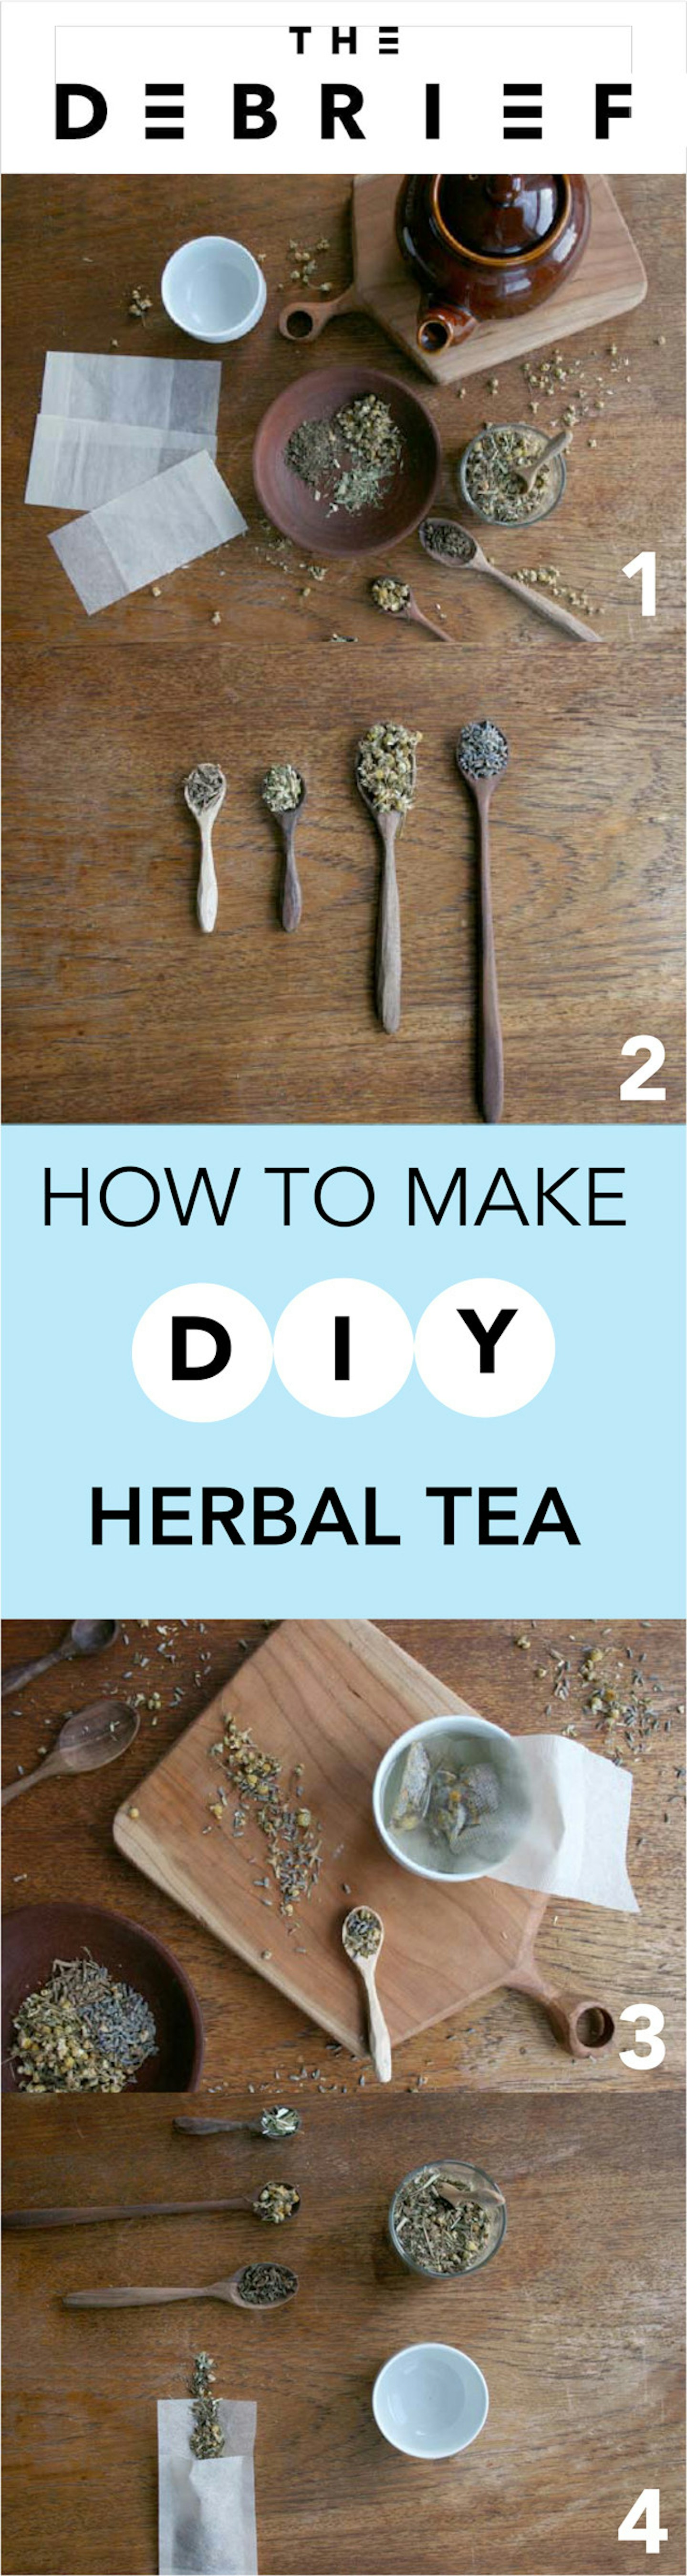 Make-herbal-tea